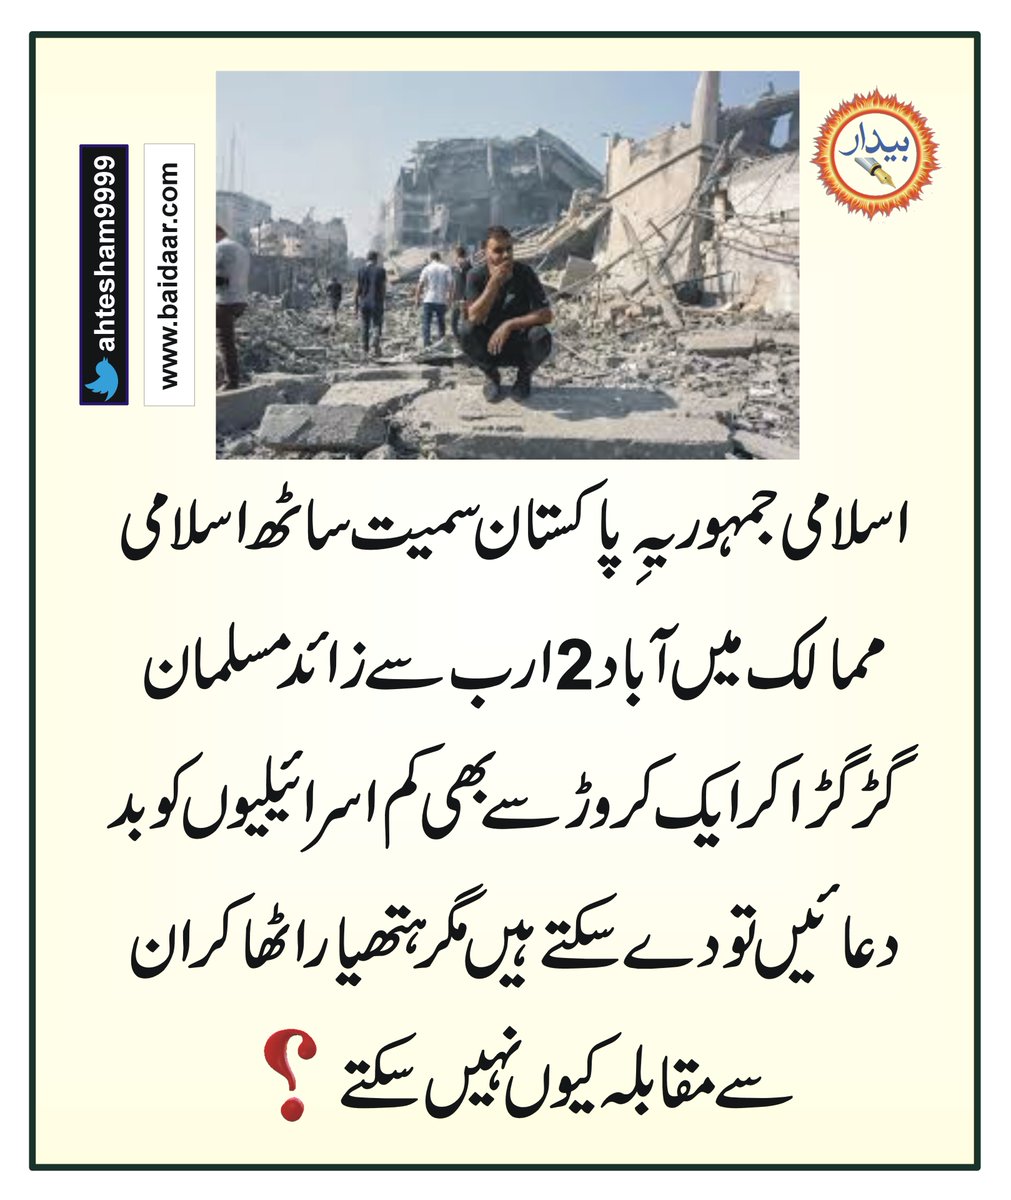 #OIC #pakistan #muslimworld #GazaGenocide